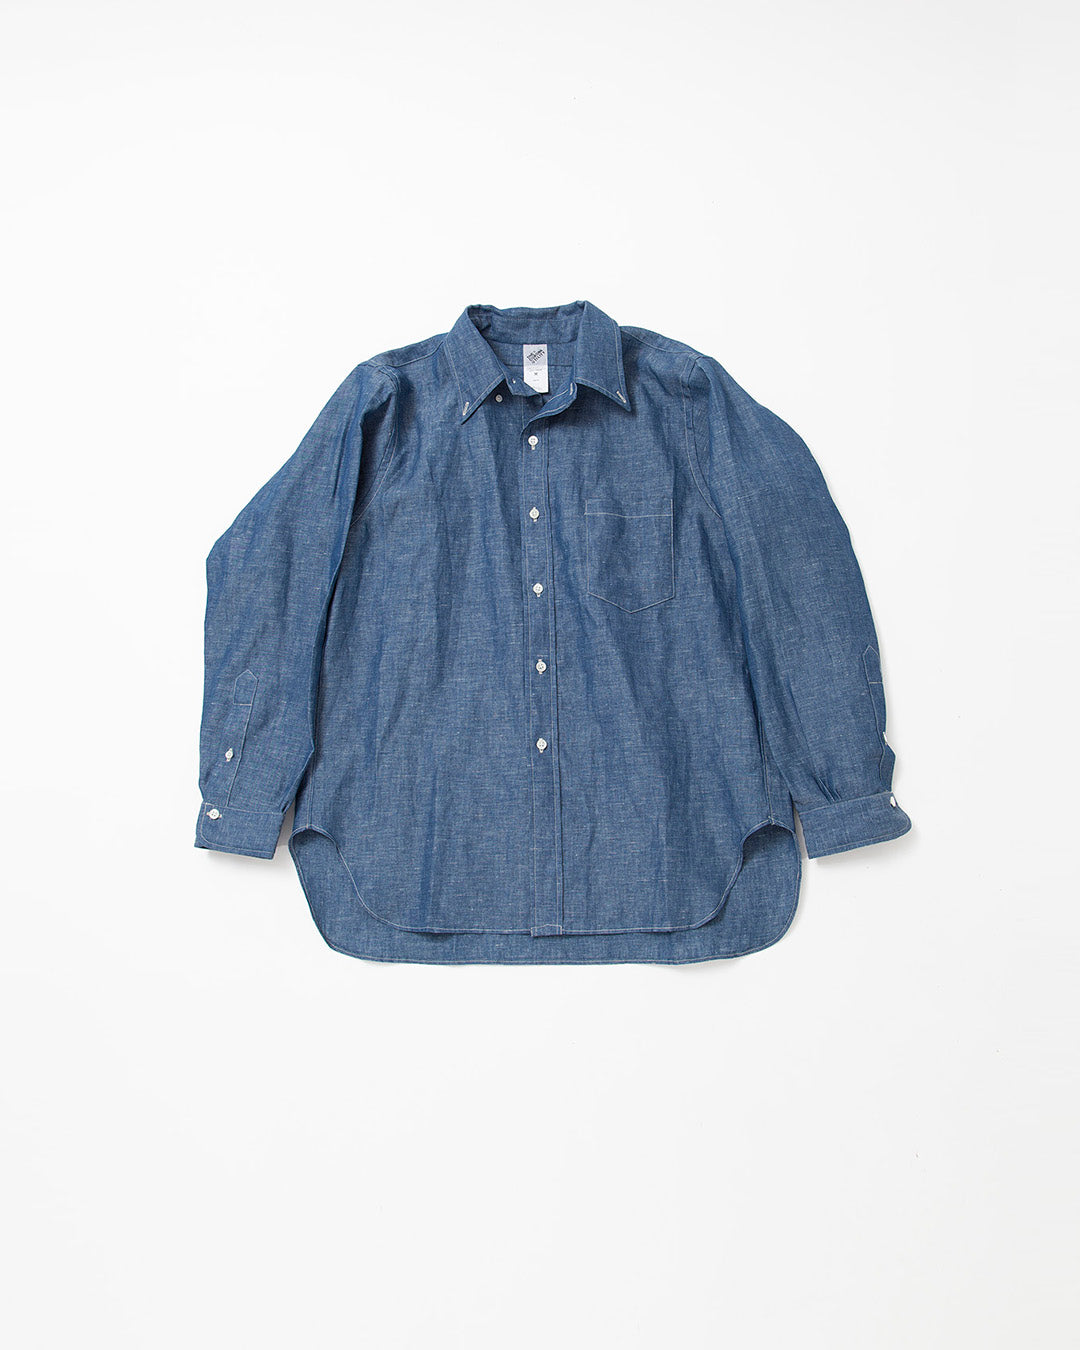 THE CORONA UTILITY・White Collar Work Shirt / Blue